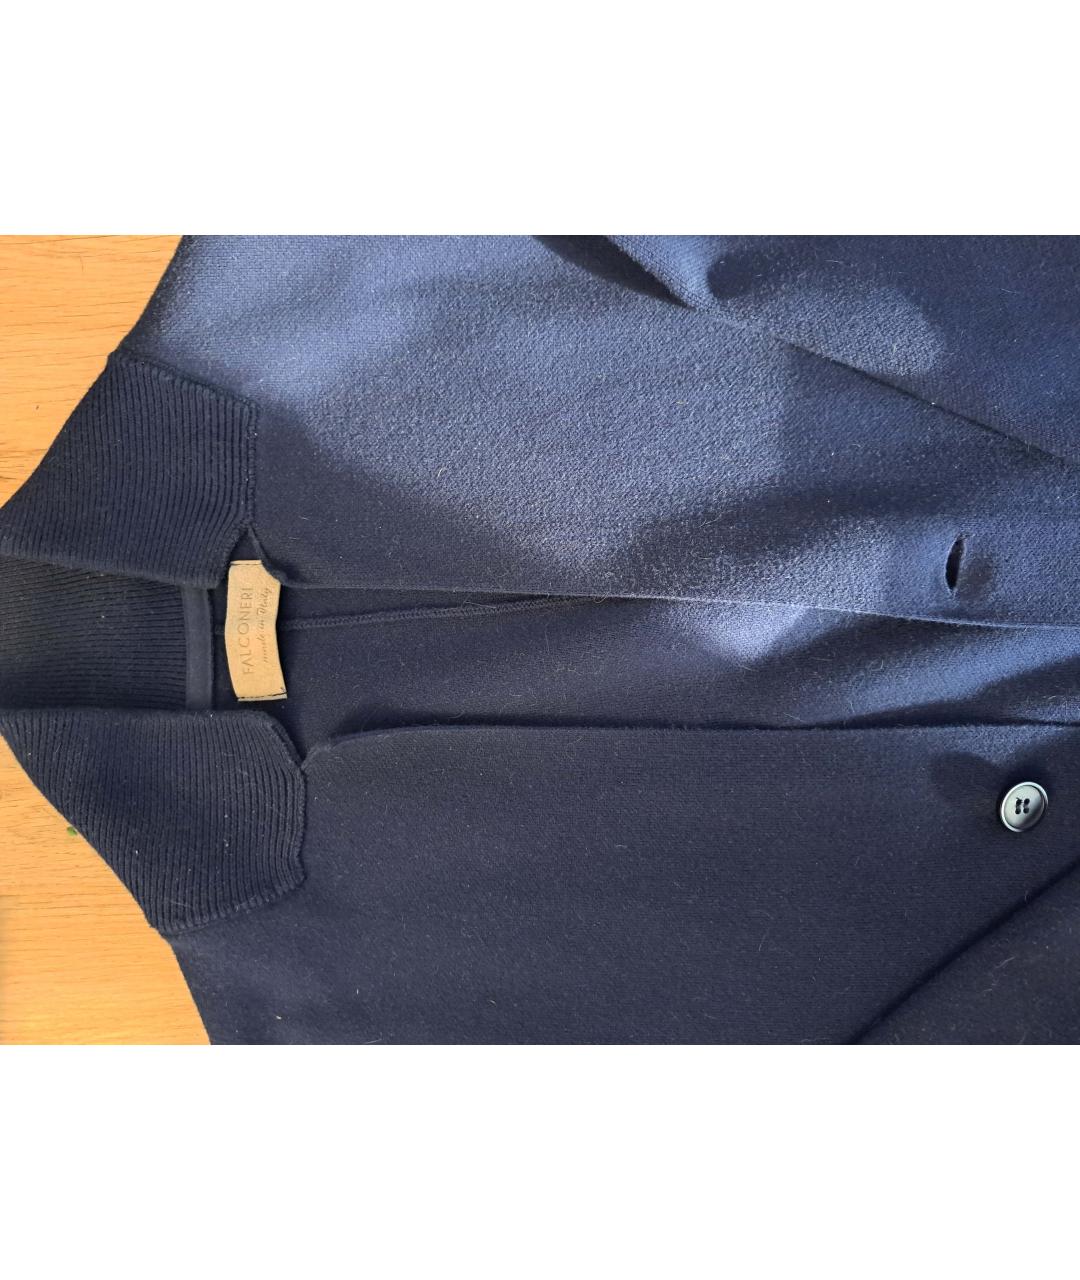 FALCONERI Темно-синий хлопковый джемпер / свитер, фото 3